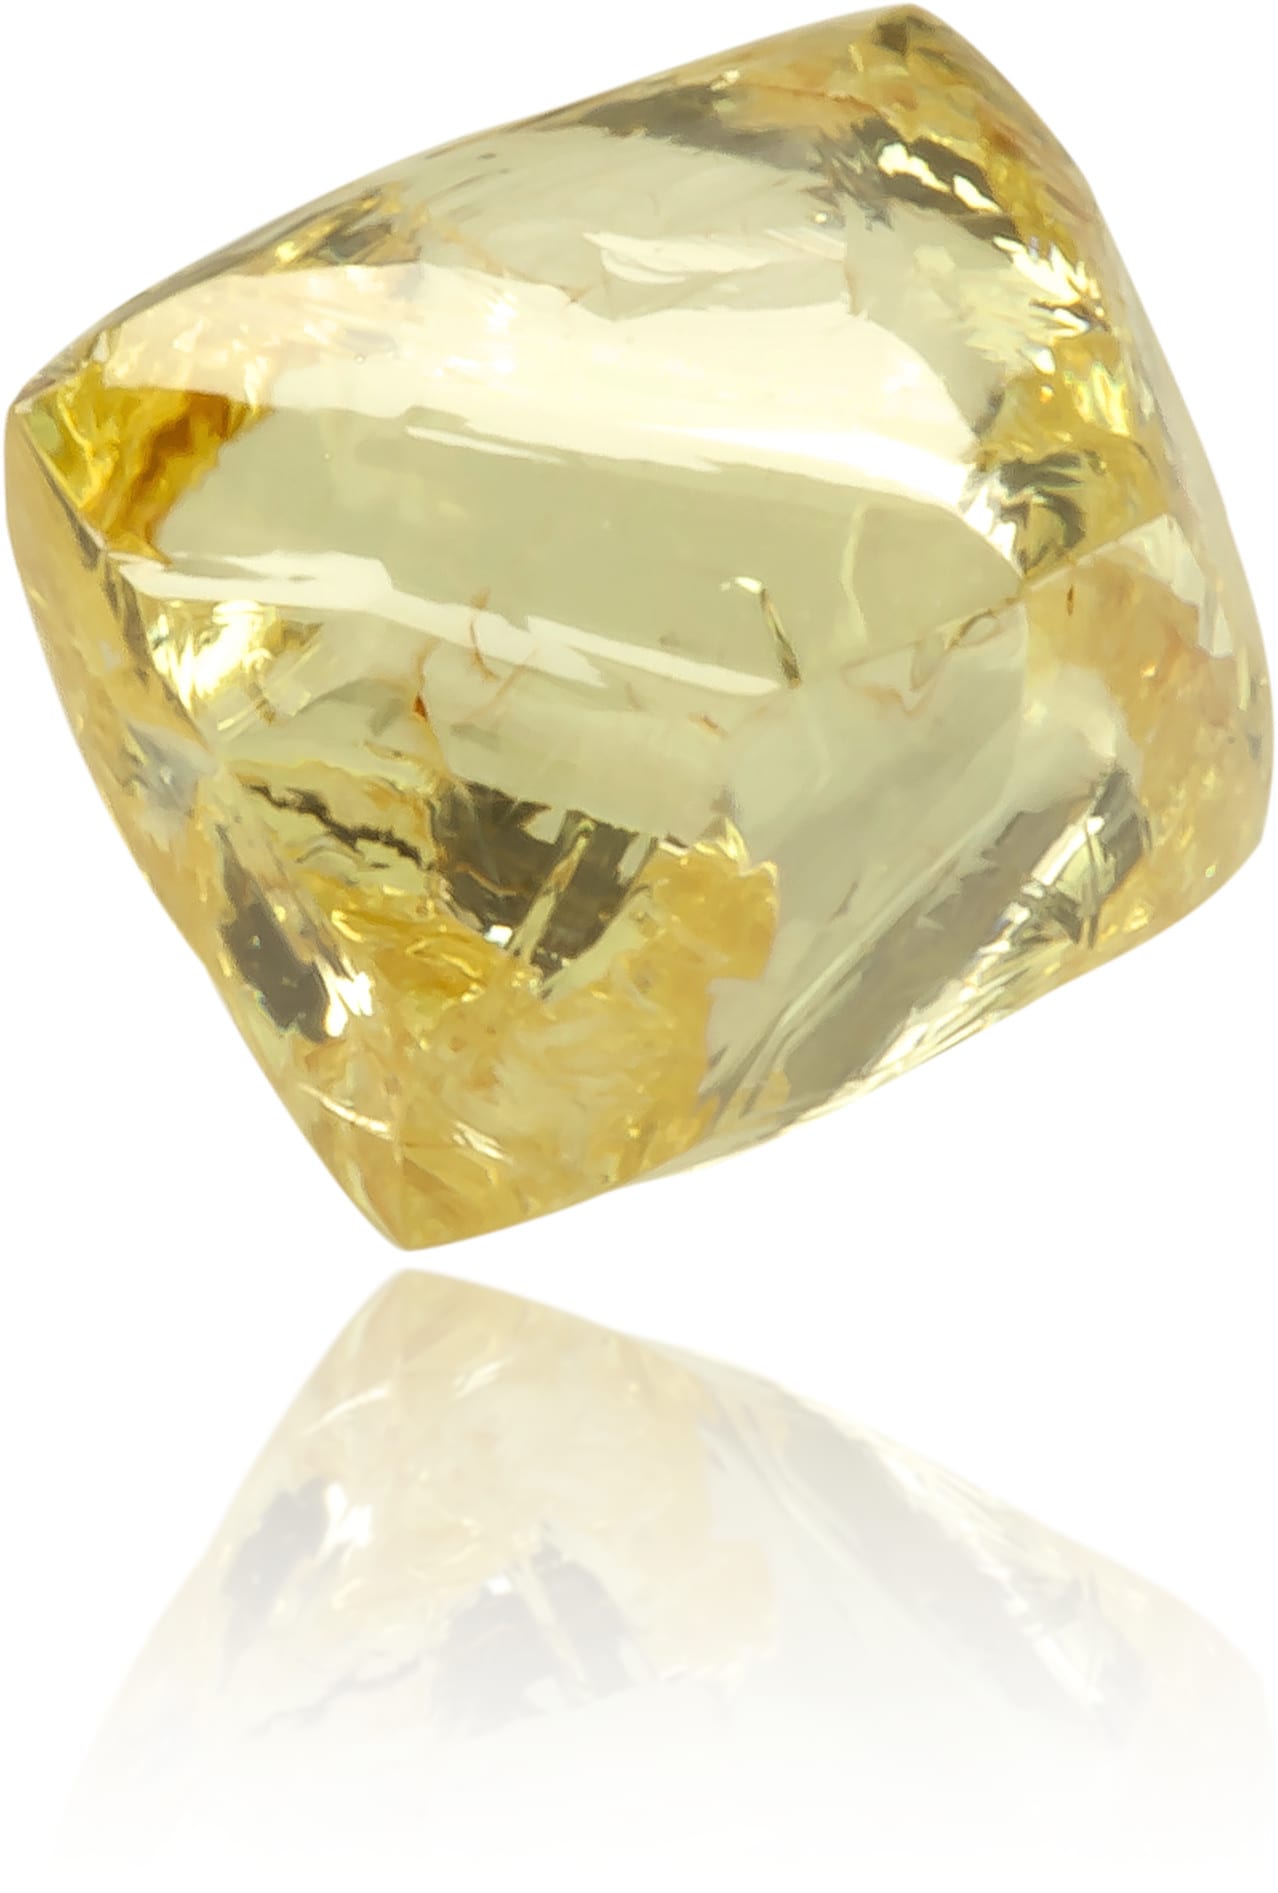 Natural Yellow Diamond Rough 0.74 ct Rough